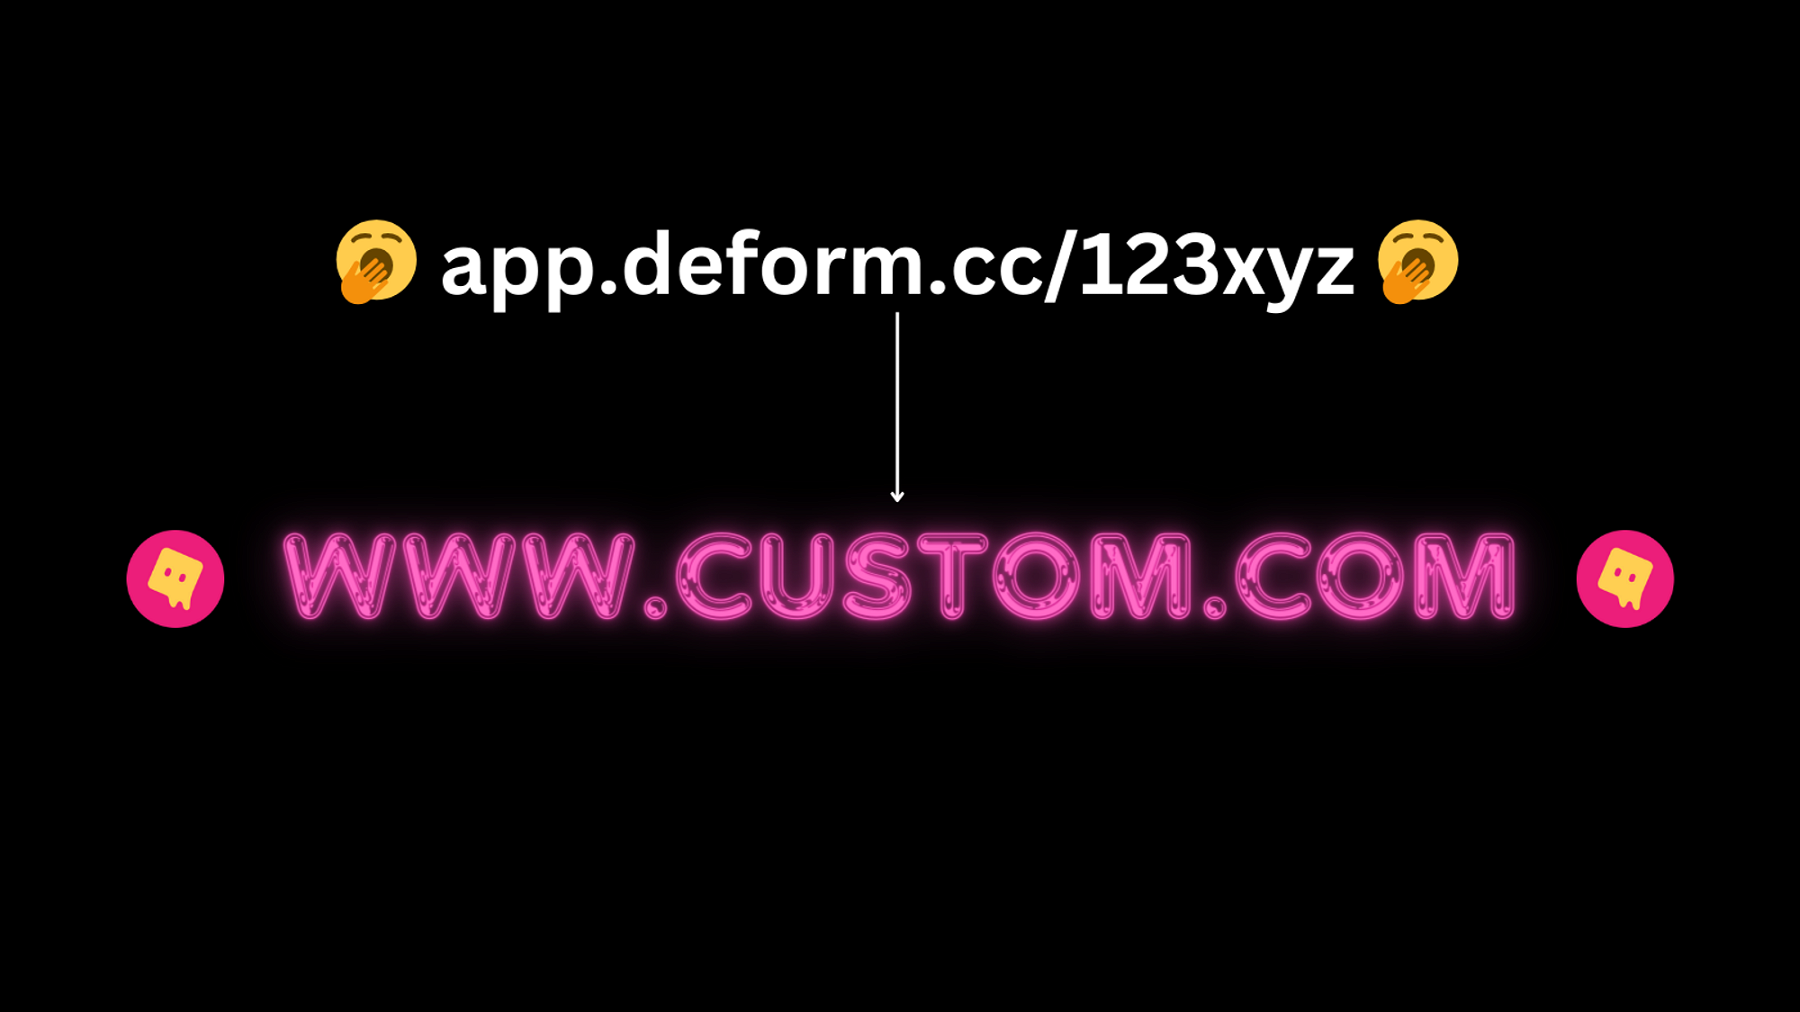 DeForm Custom Domain Setup Guide